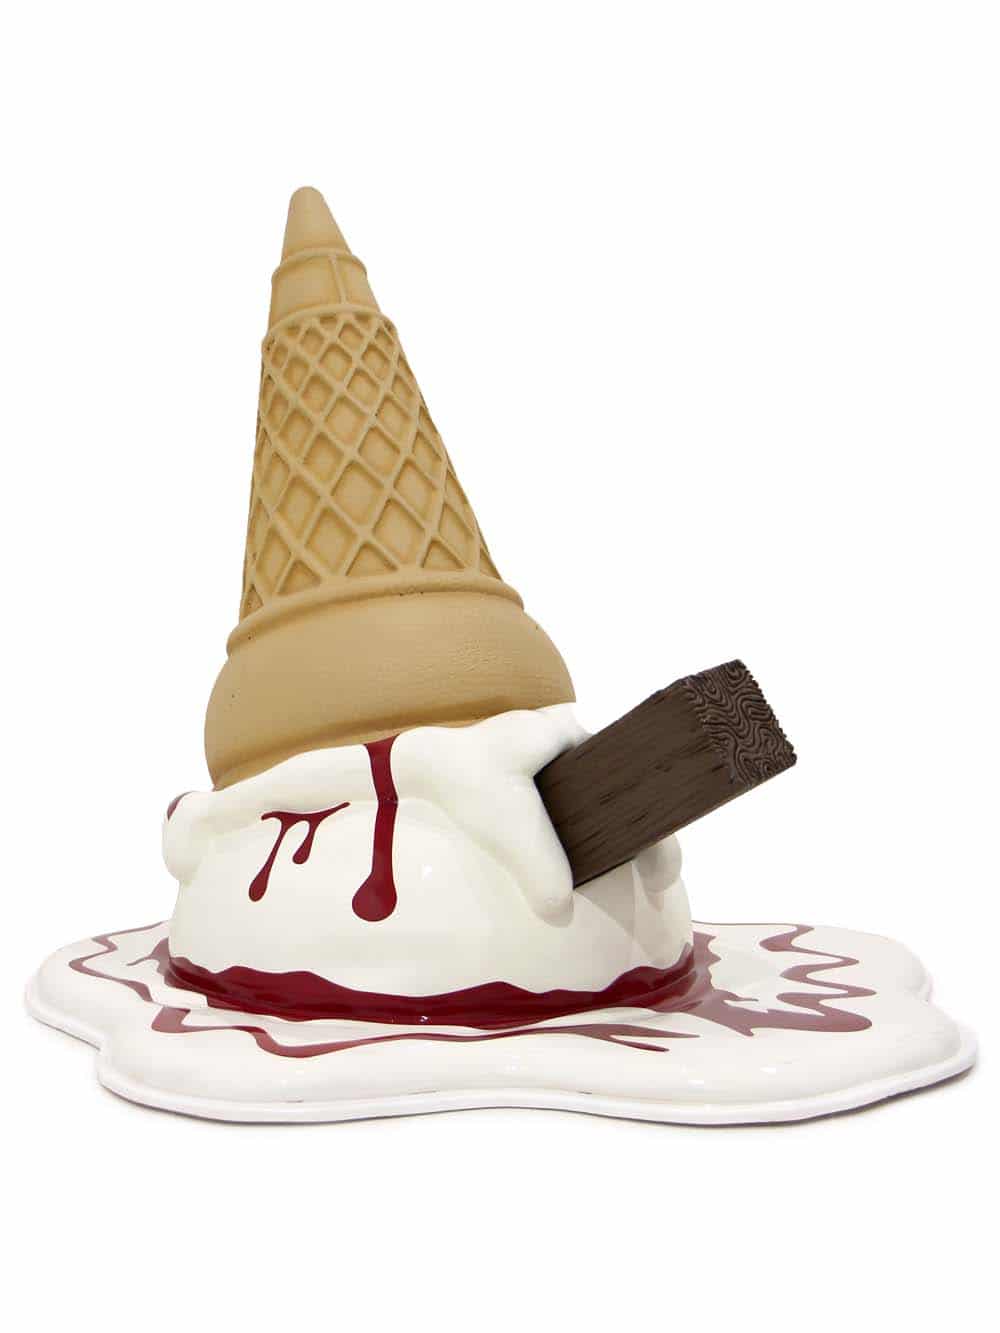 Large dropped Ice Cream - Vanilla & Raspberry